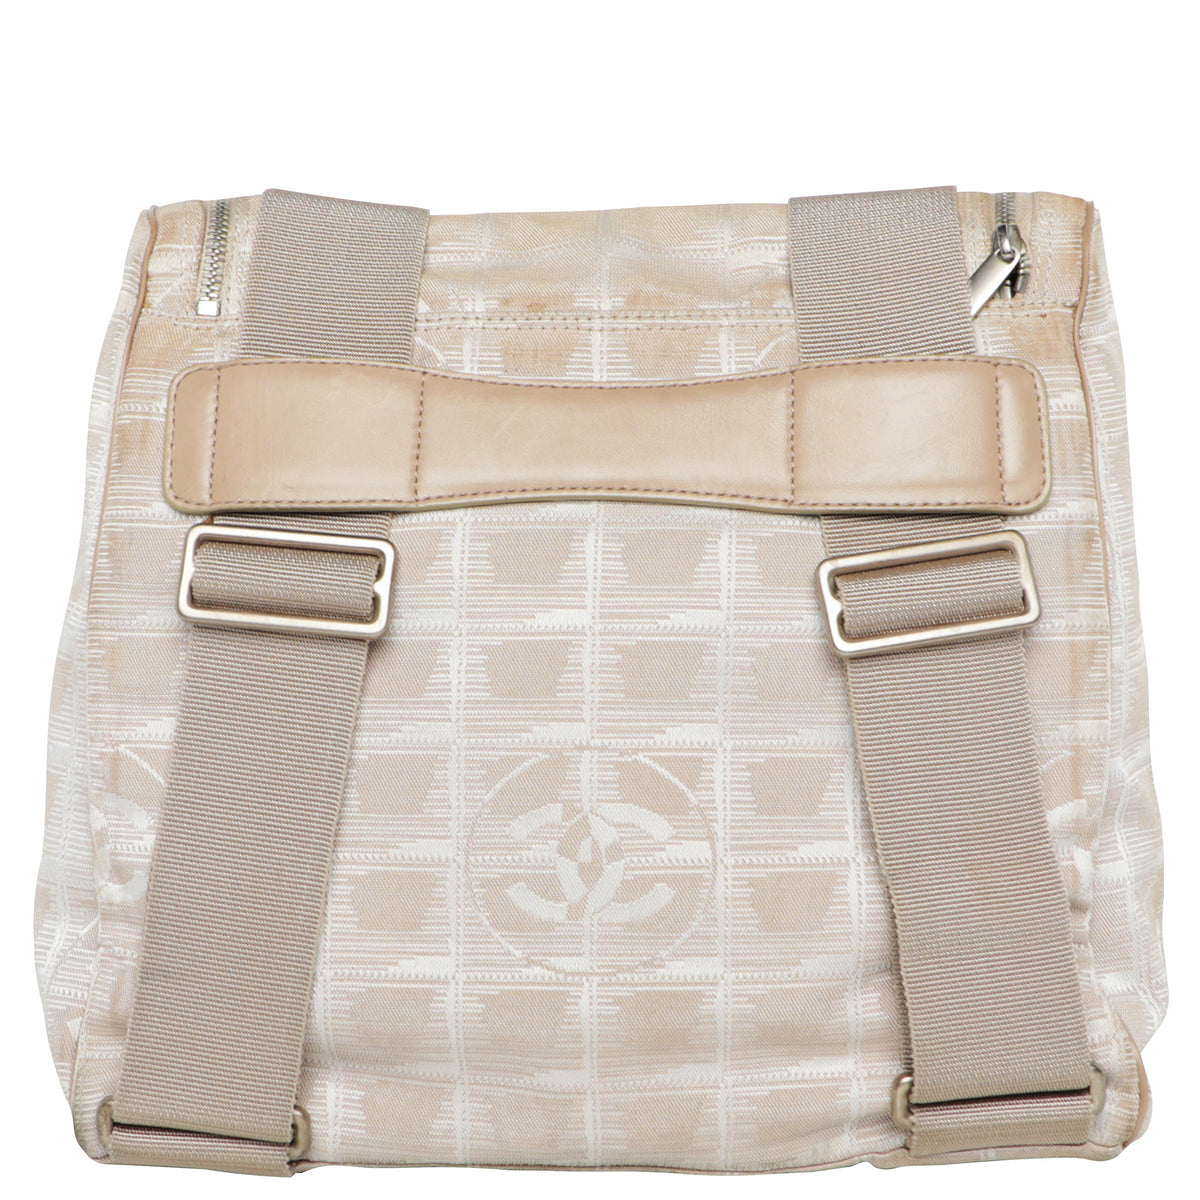 CHANEL, Bags, Chanel Cc Travel Line Nylon Y2k Shoulder Bag